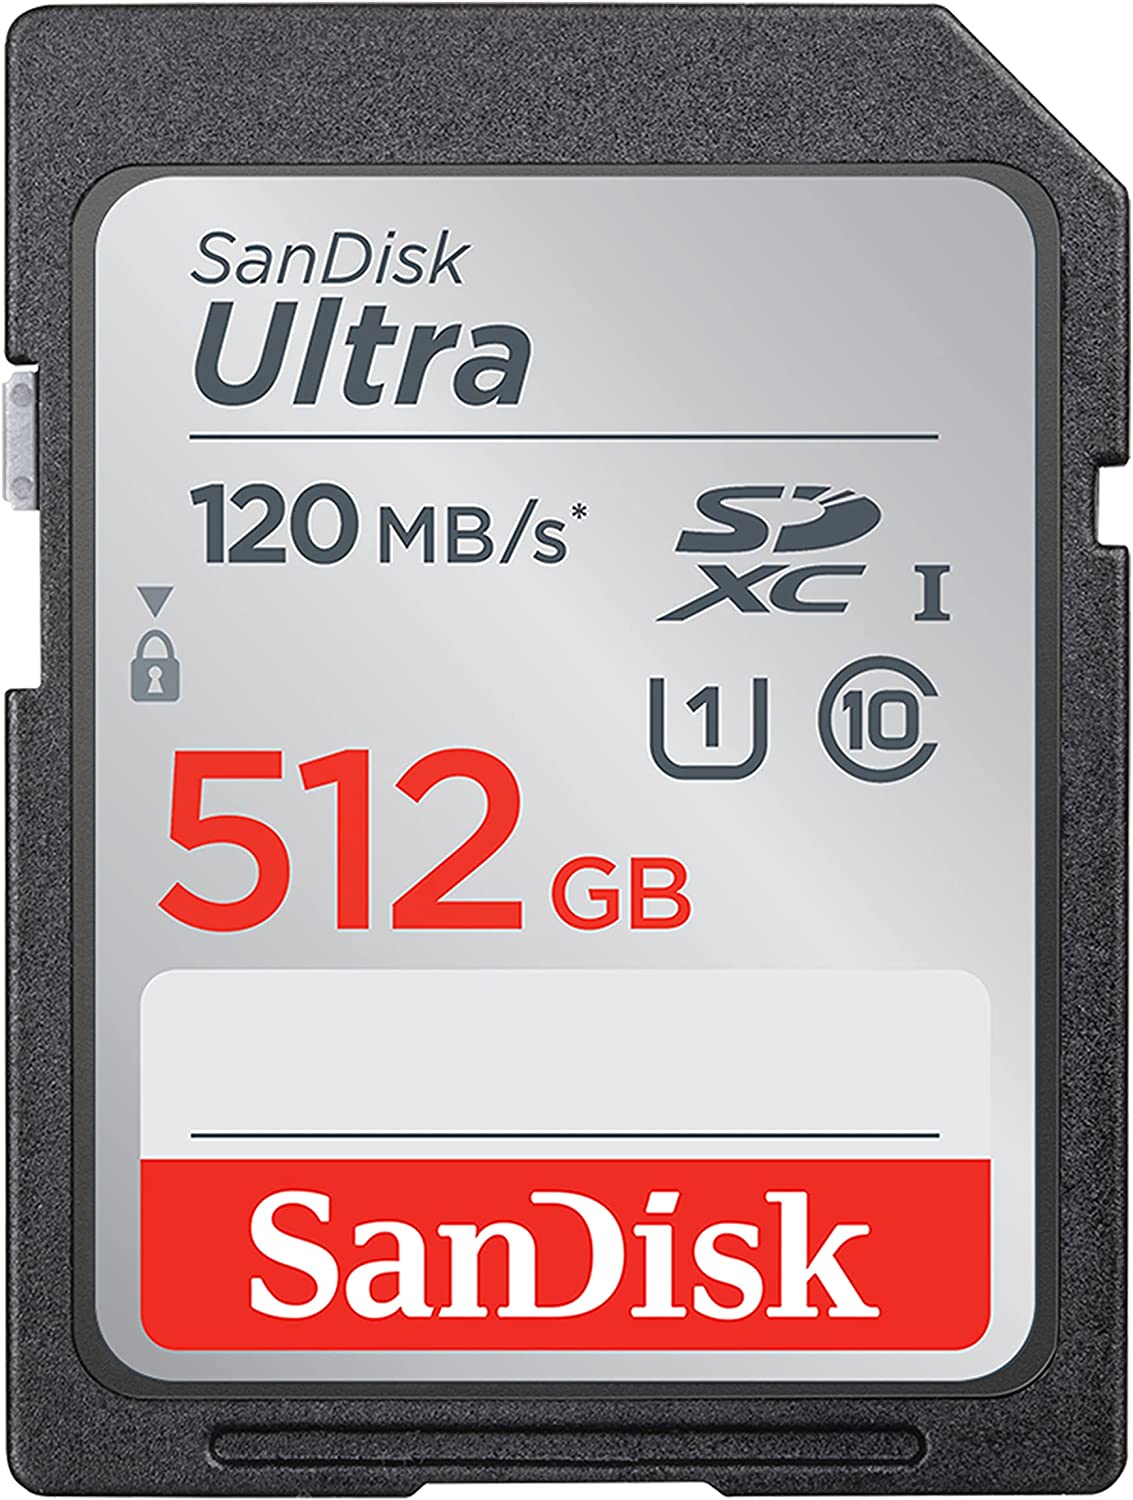 SanDisk 512GB Ultra UHS-I SDXC Memory Card